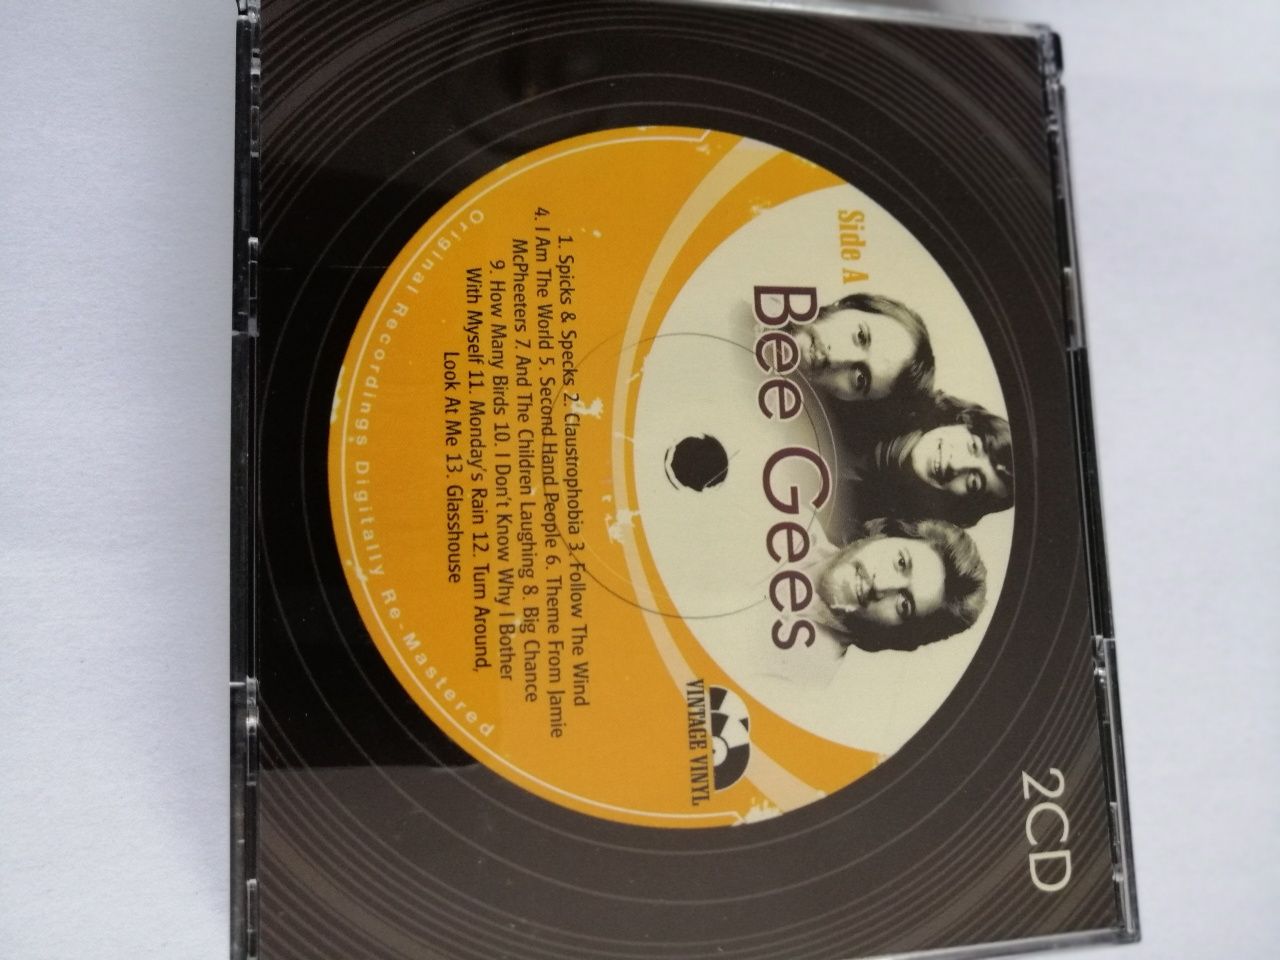 Bee Gees " Feel The Groove" 2 płyty CD